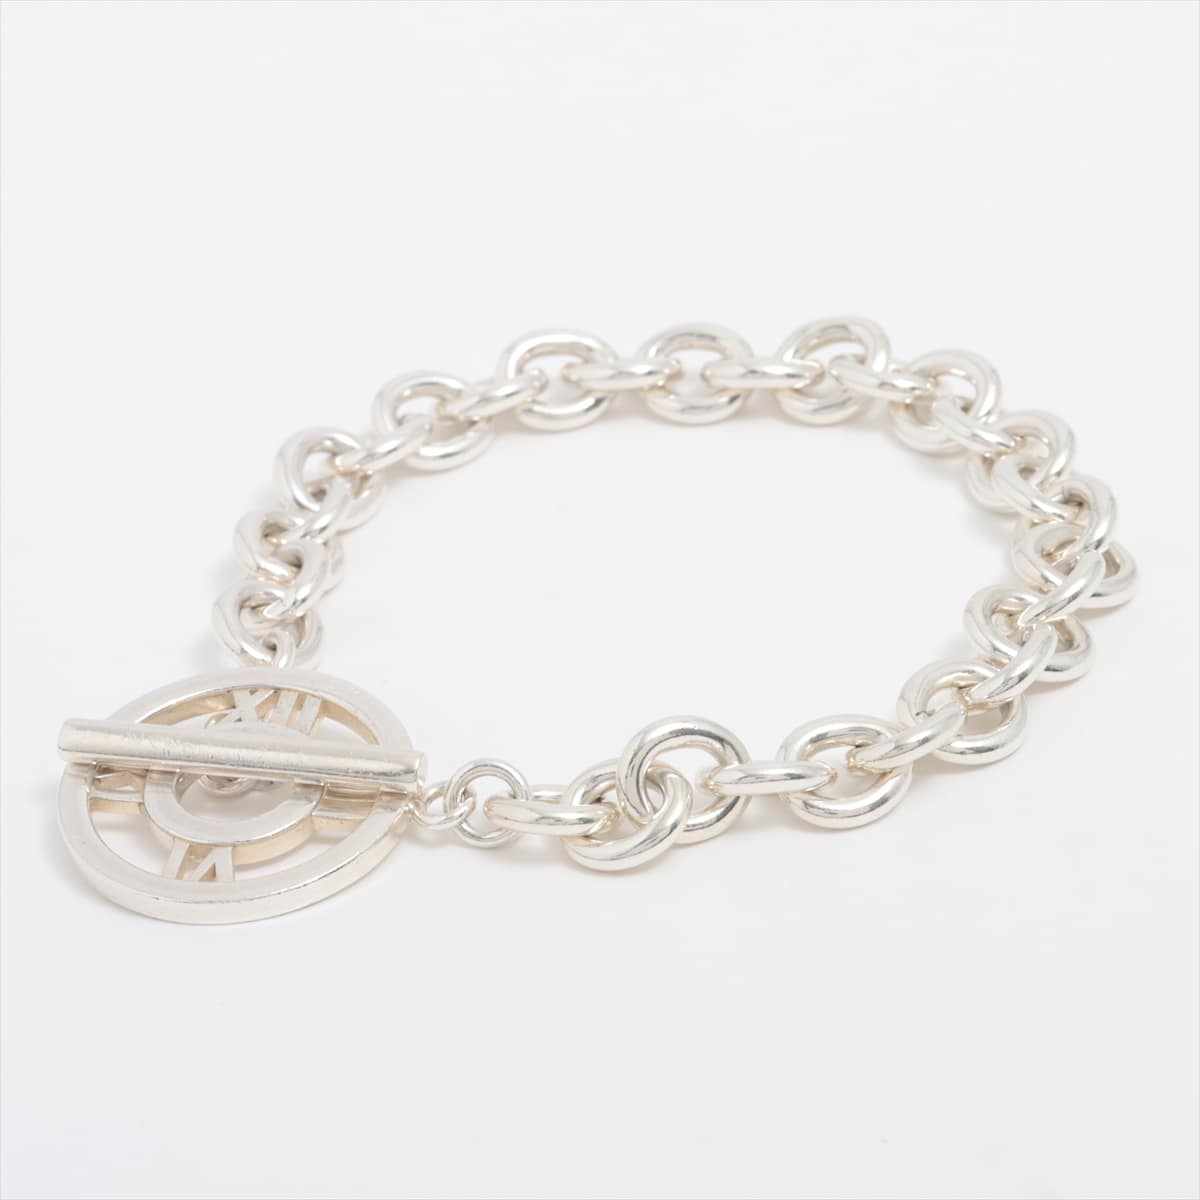 Tiffany Atlas Bracelet 925 26.2g Silver